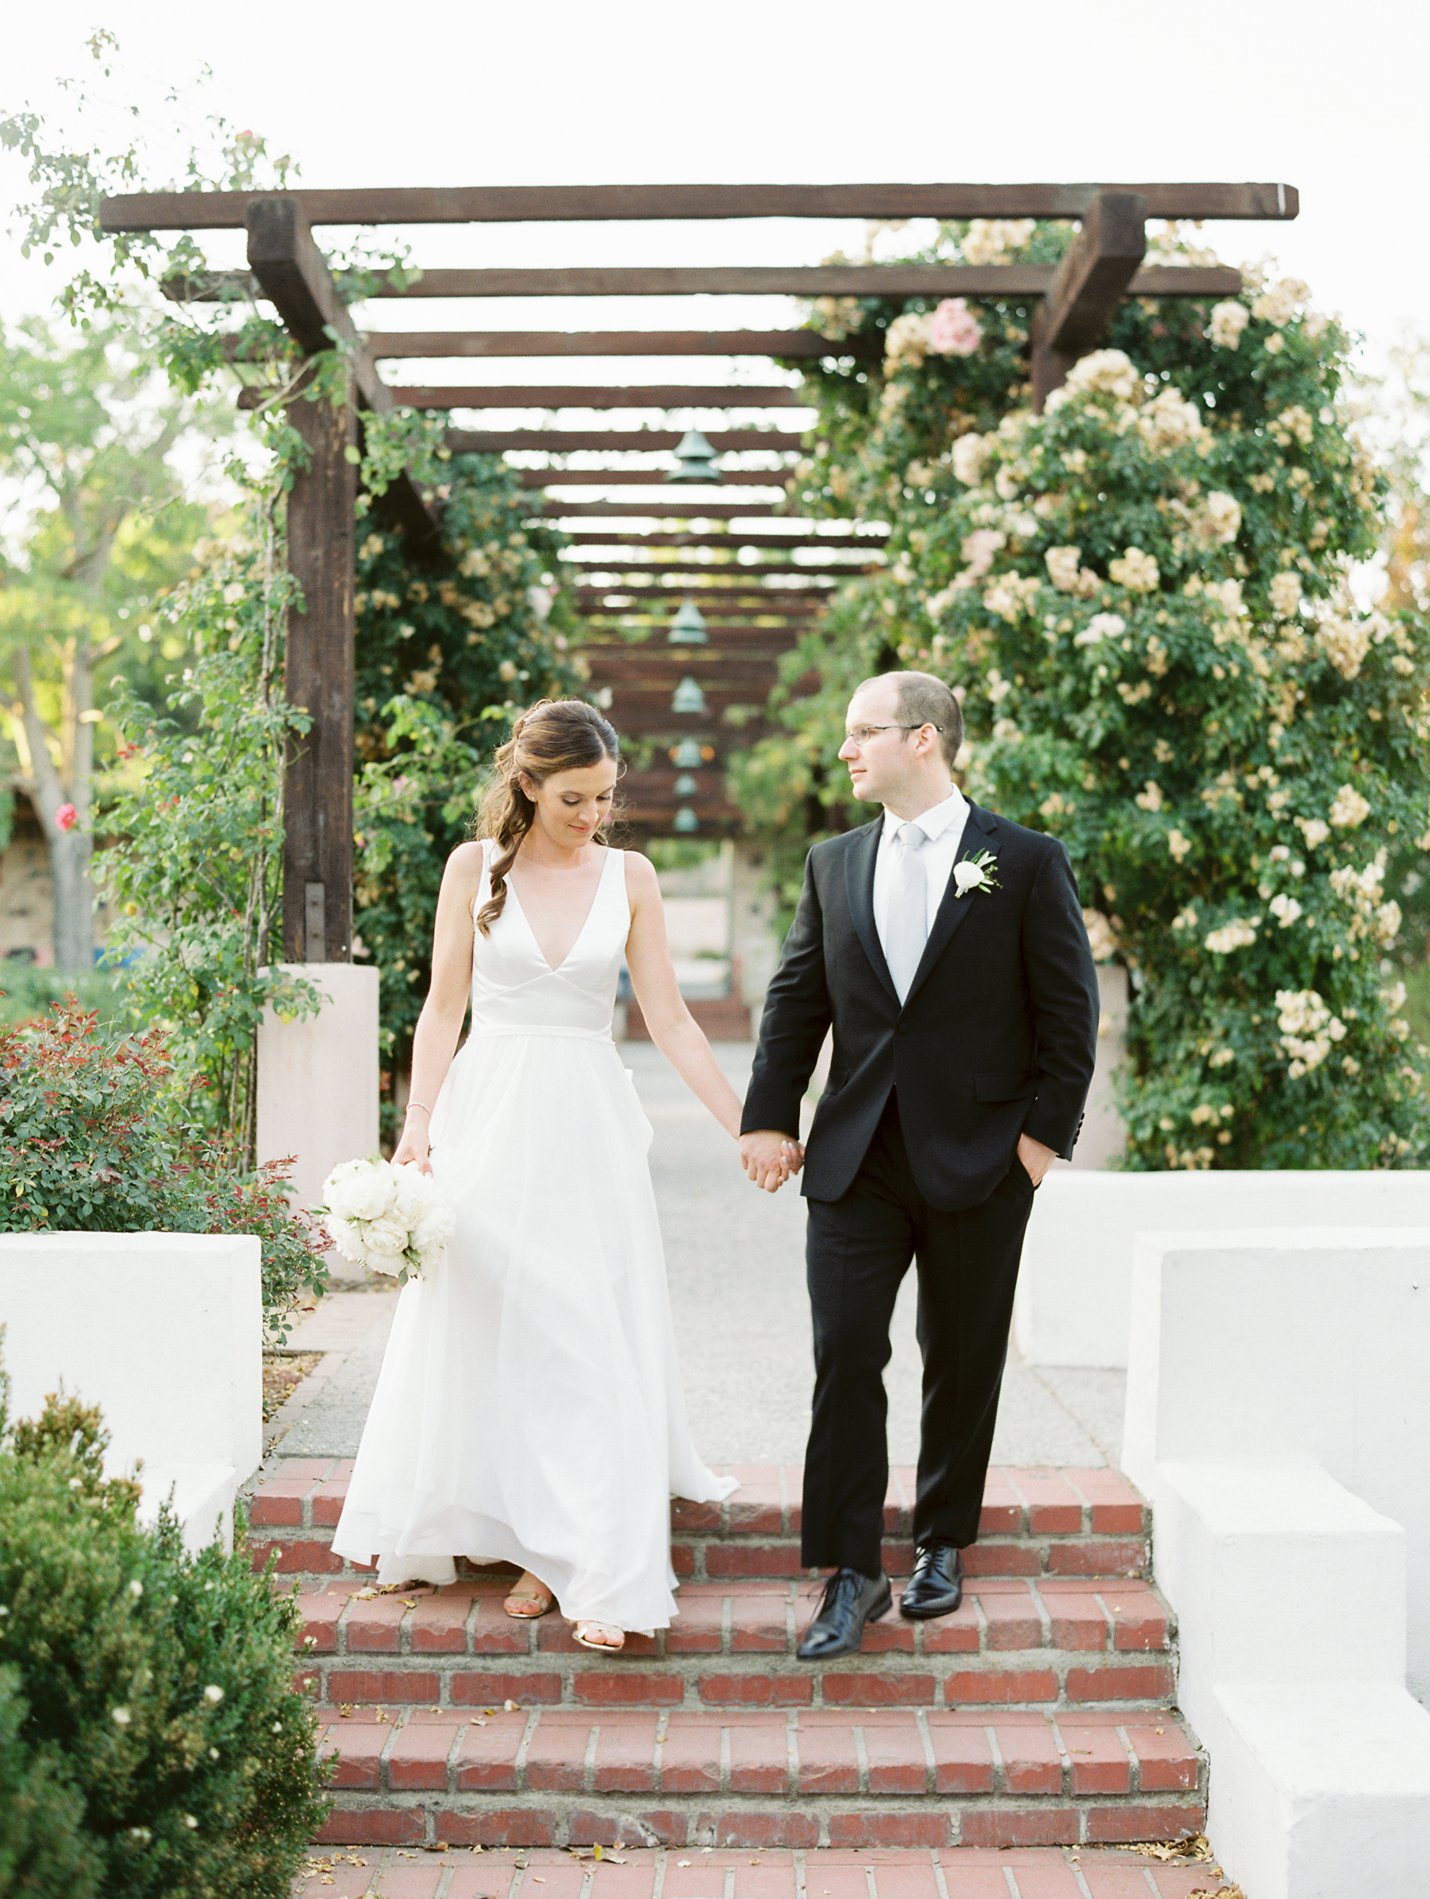 Scripps College Wedding - Southern California Wedding Photographer - Rachel Solomon Photography